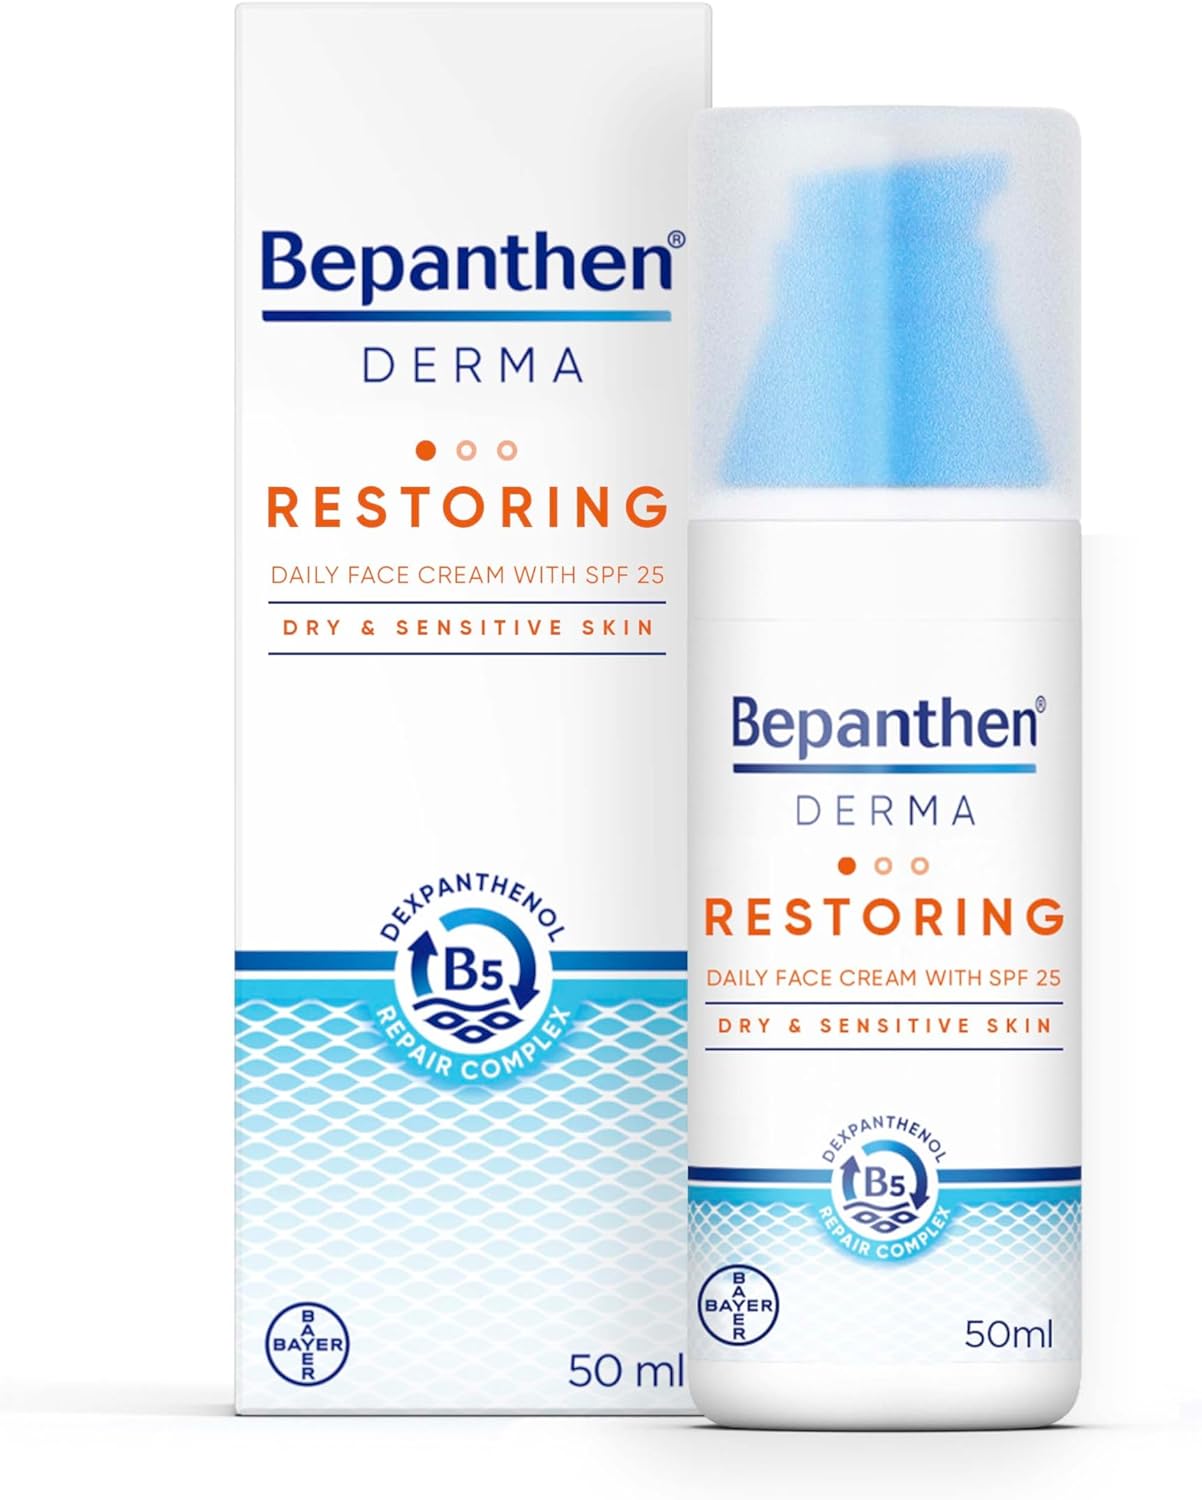 Bepanthen Derma Restoring Daily Face Cream With SPF 25, 50ml Pump Bottle